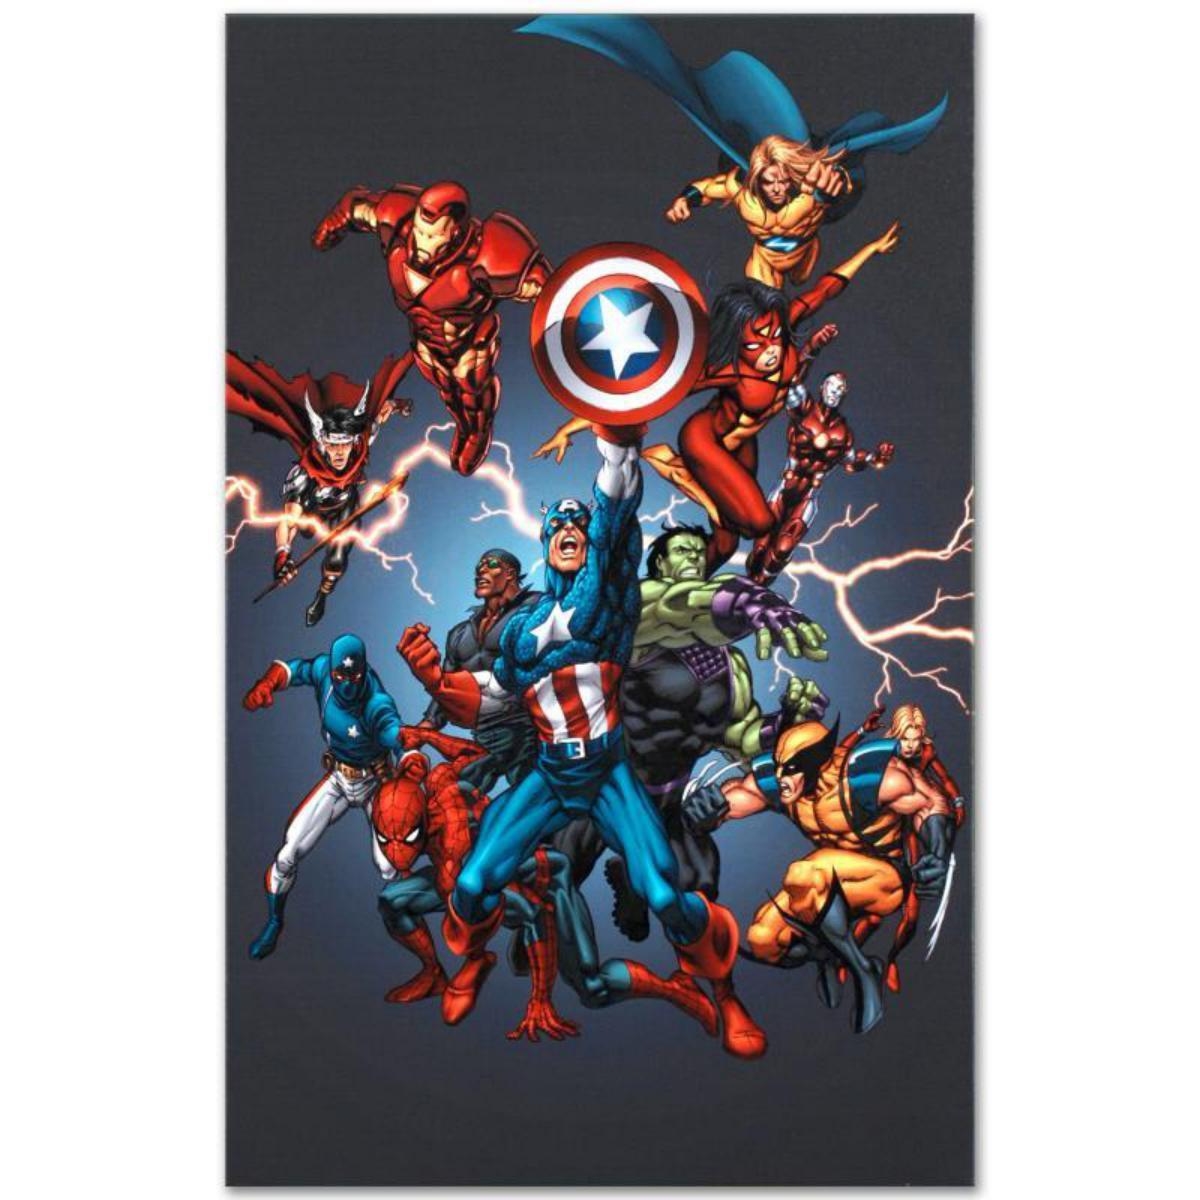 Tableau Avengers - Affiche Marvel